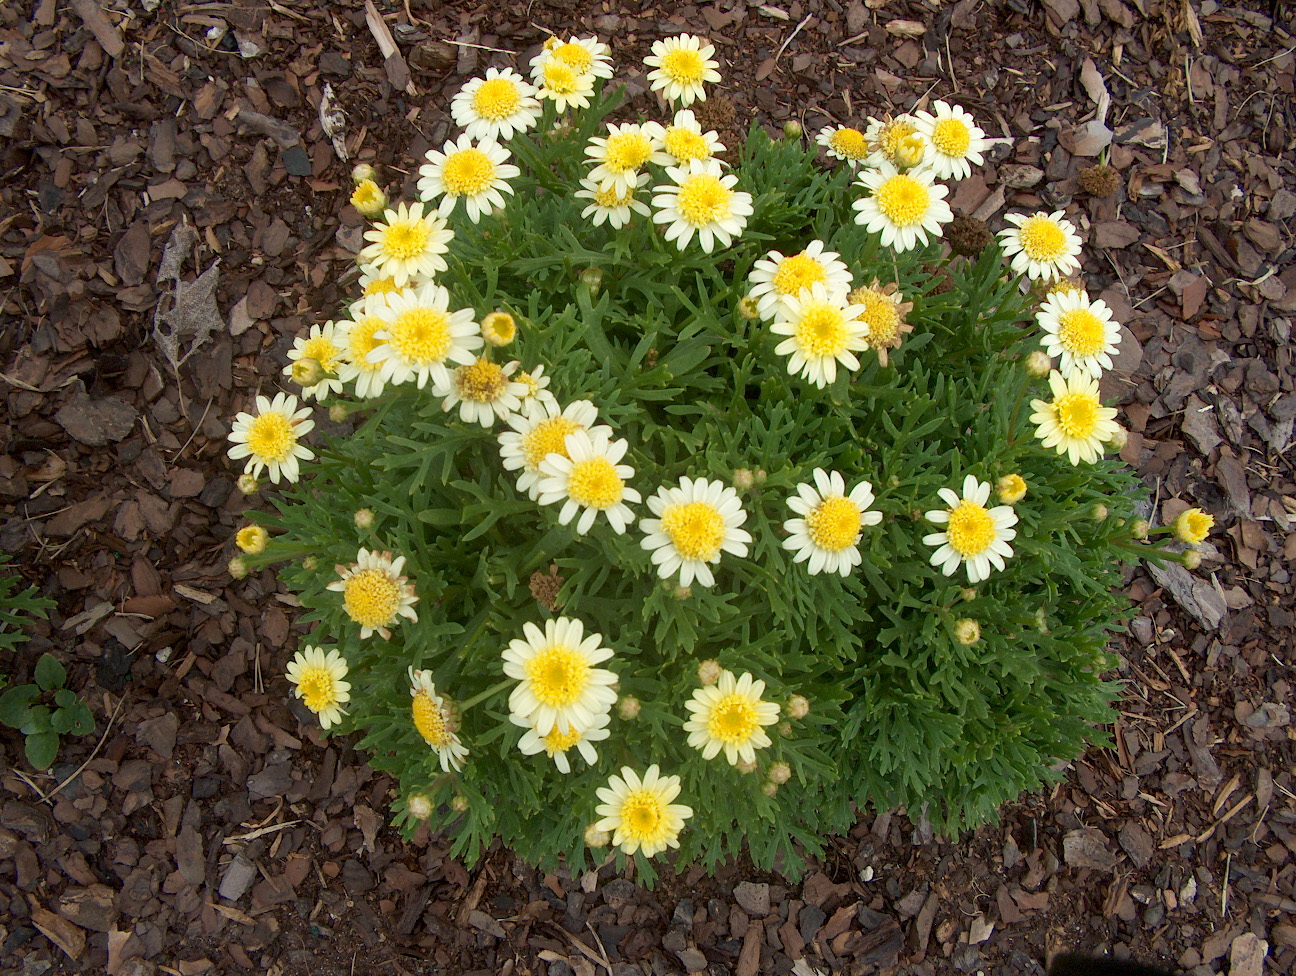 Argyranthemum frutescens 'Crested Primrose' / Argyranthemum frutescens 'Crested Primrose'